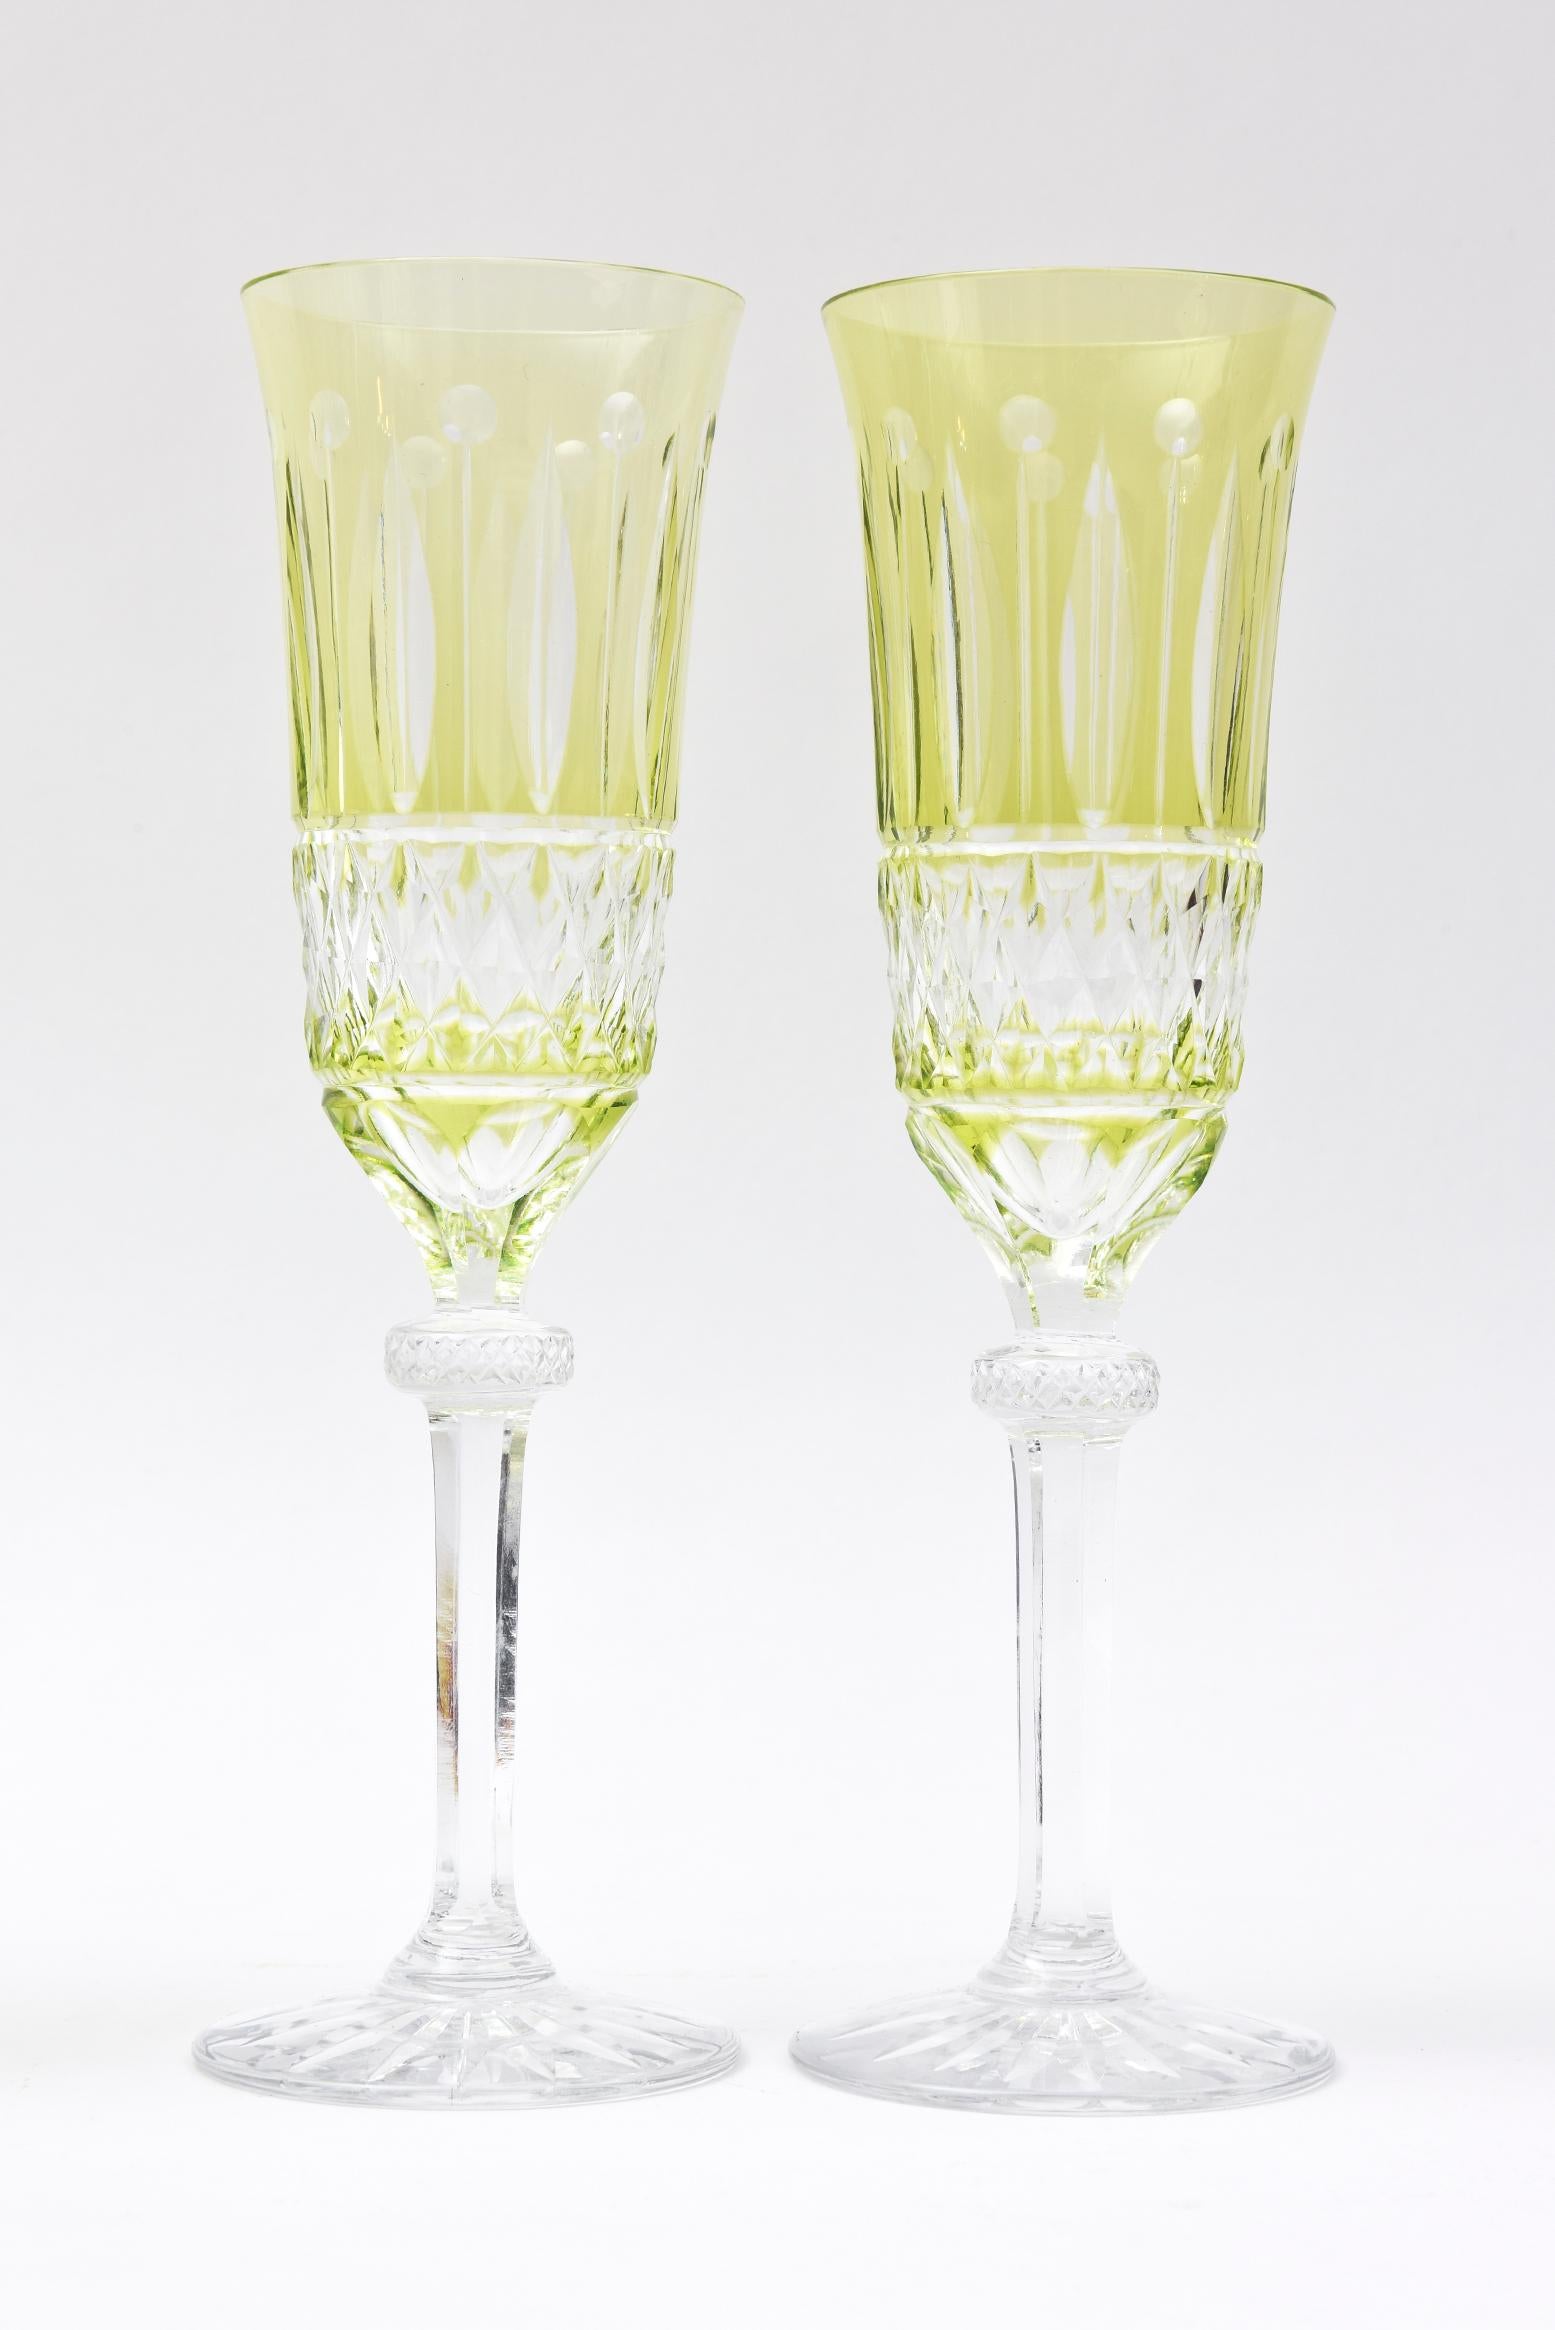 Czech 11 Champagne Flutes, Cut Crystal Vintage, Great Chartreuse Color